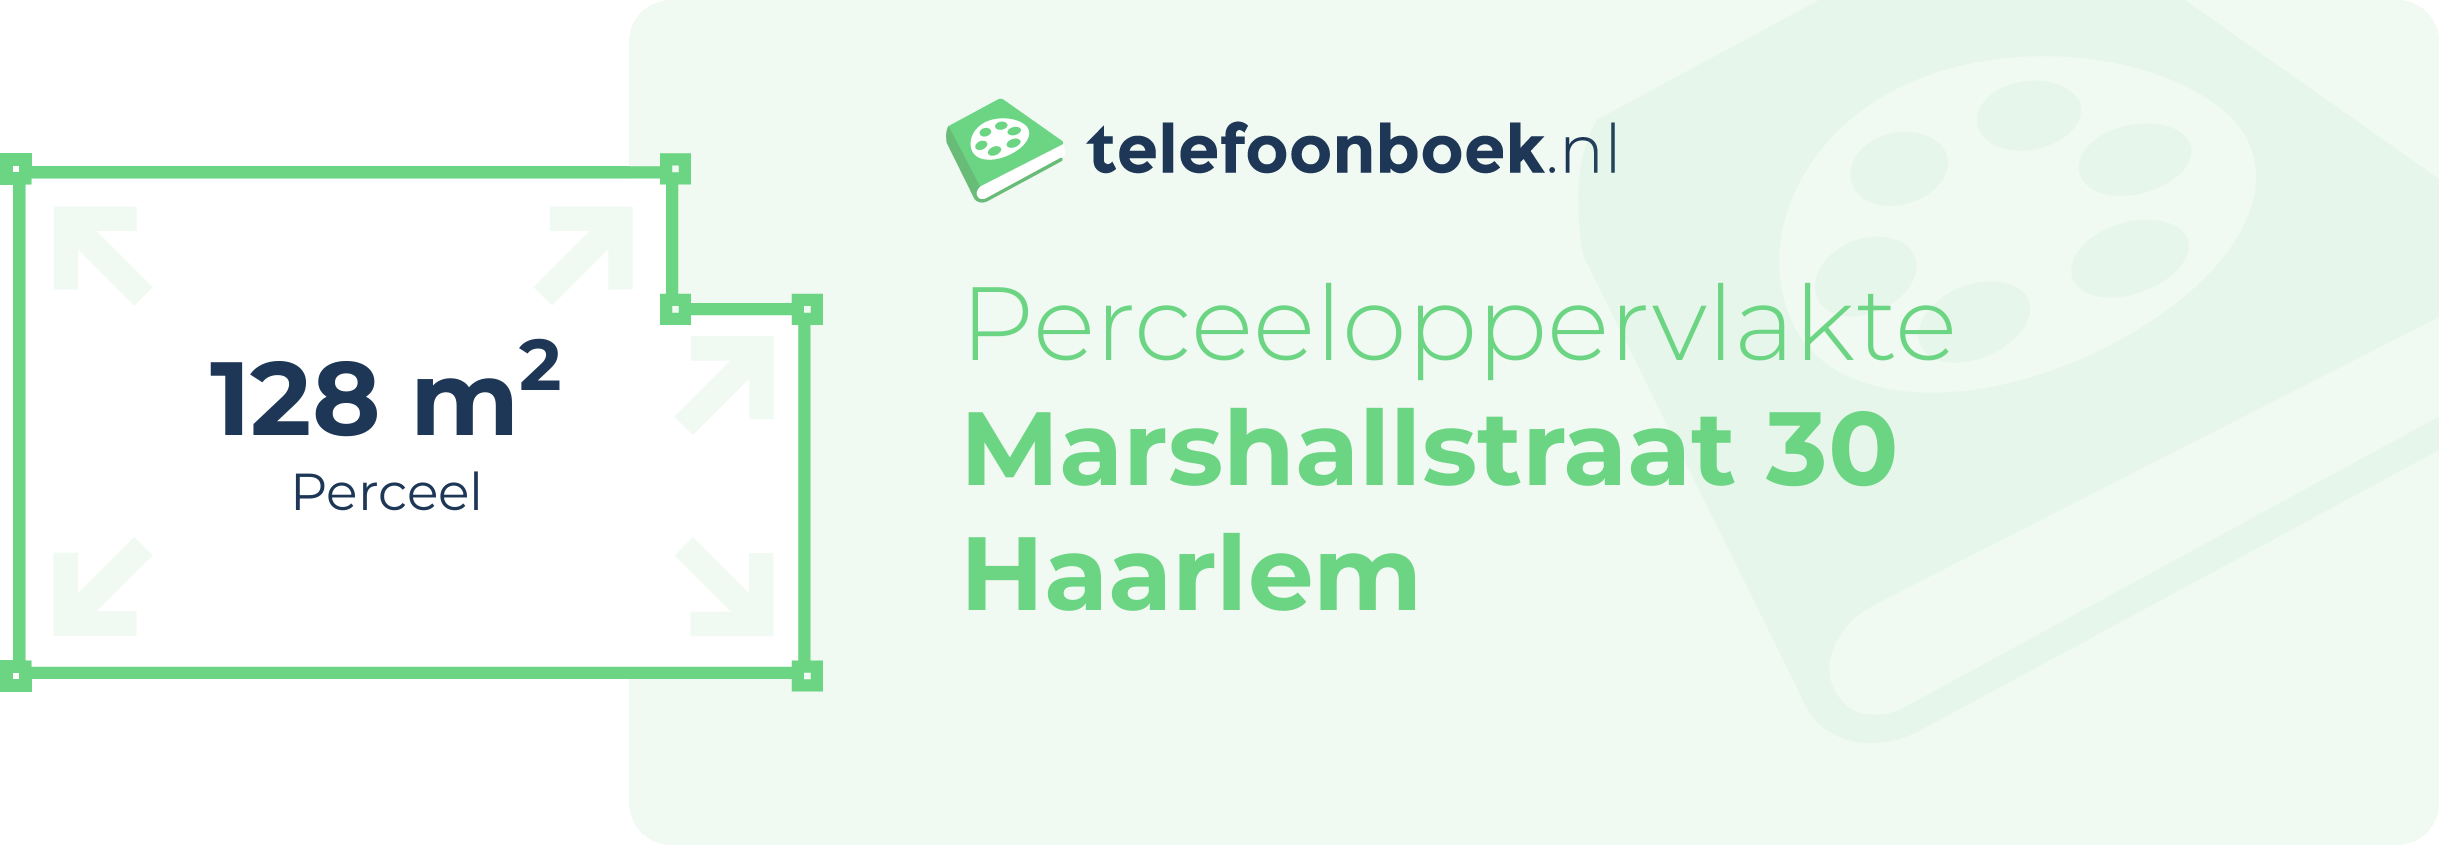 Perceeloppervlakte Marshallstraat 30 Haarlem